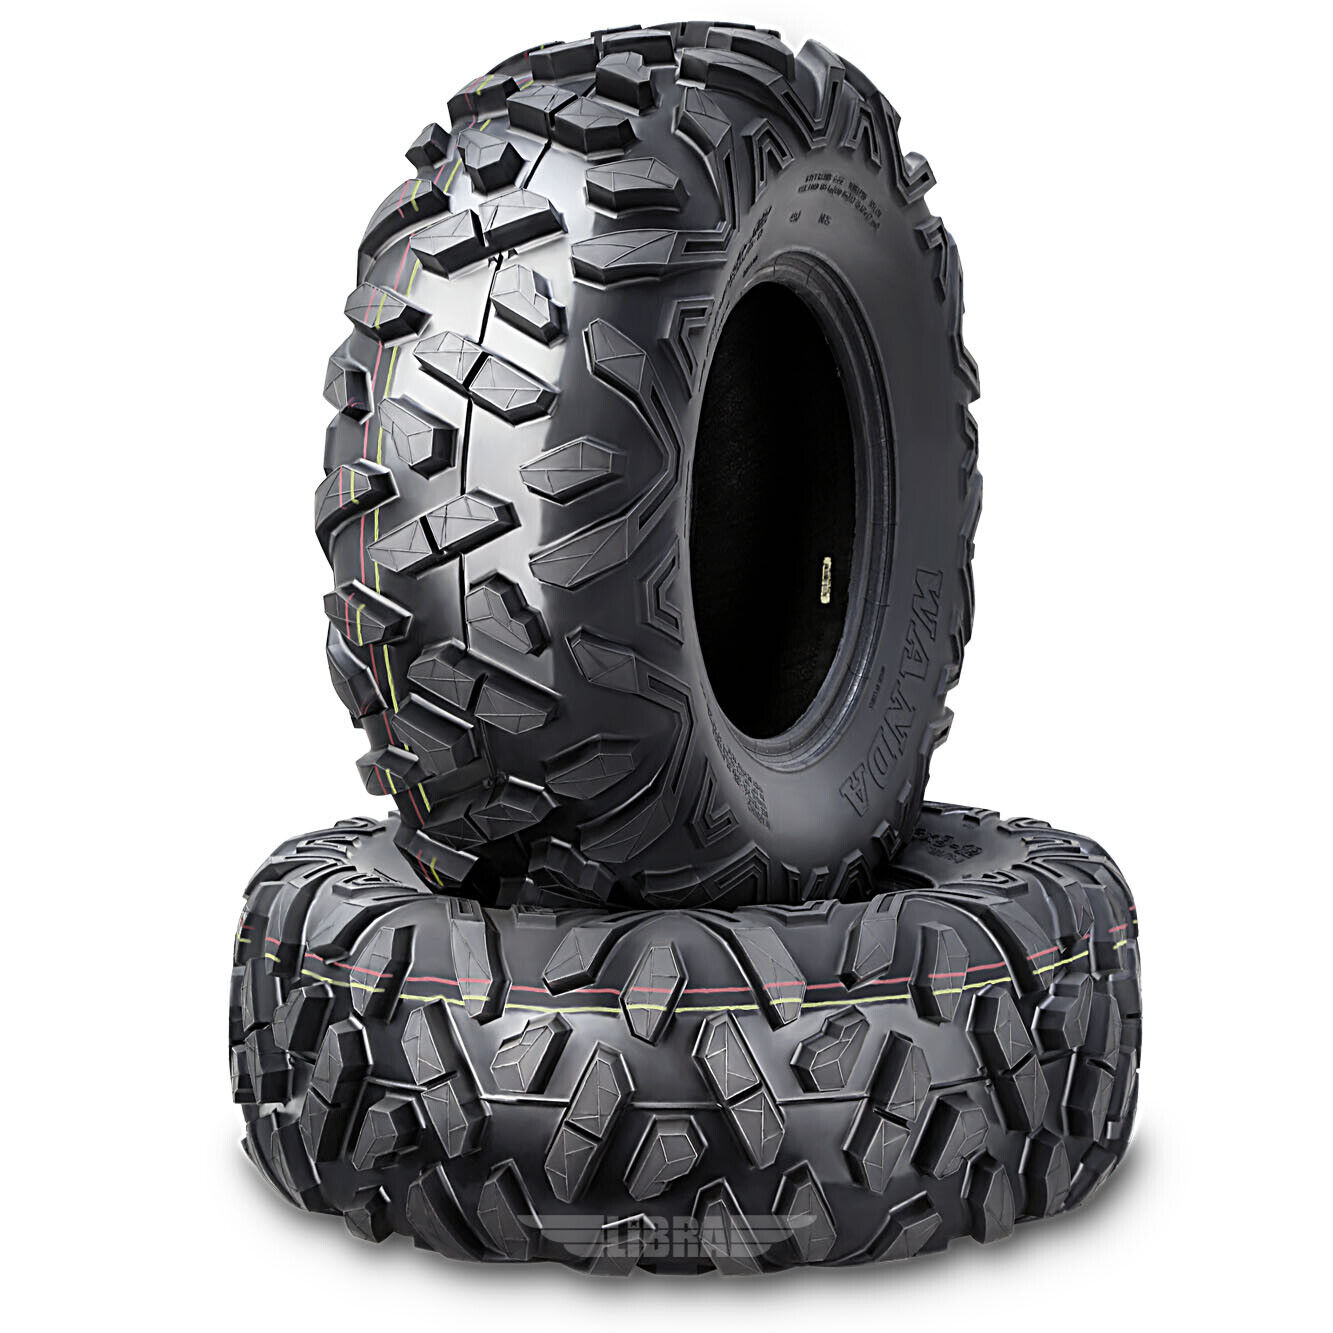 (2) 27x9-14 Front Tire Set for 2014 John Deere GATOR XUV825I 4x4SE Bighorn Style